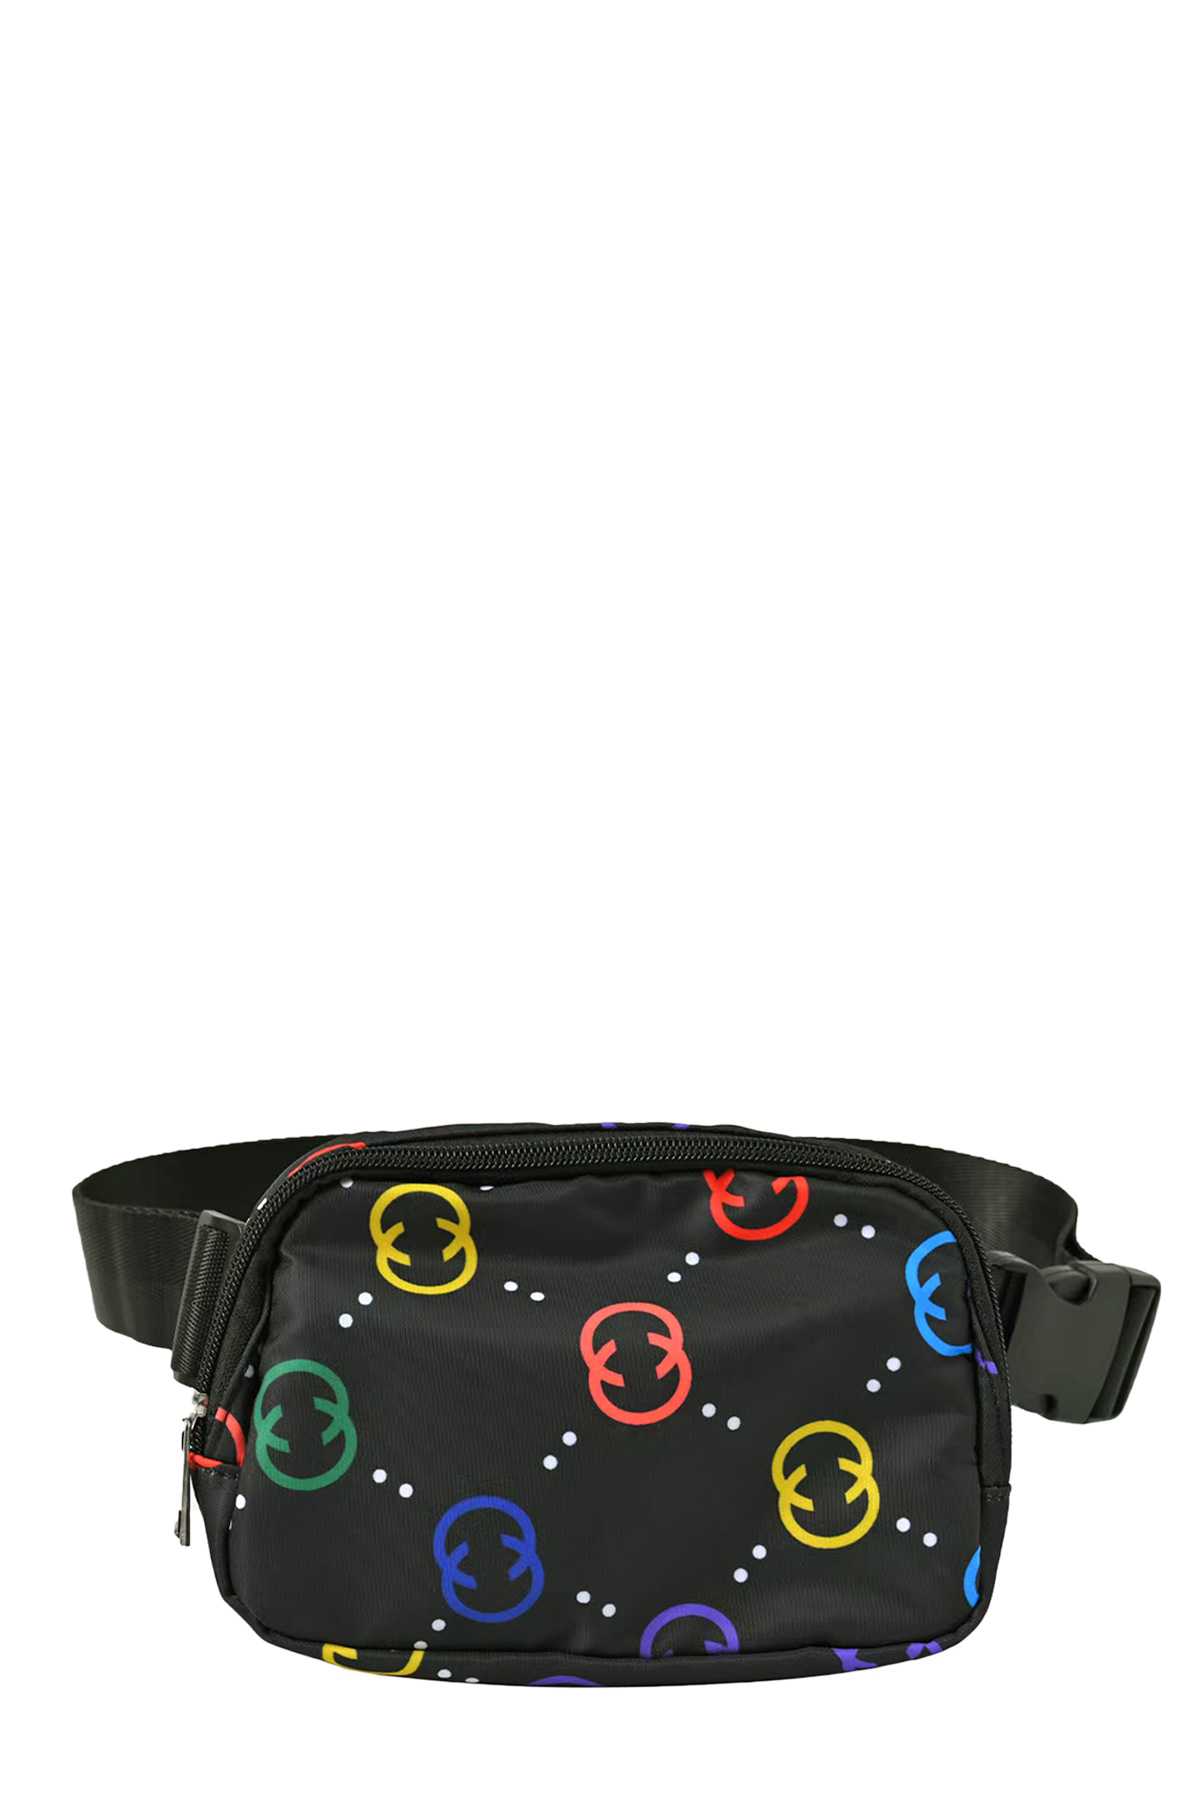 Multicolored Double C Funny Bag